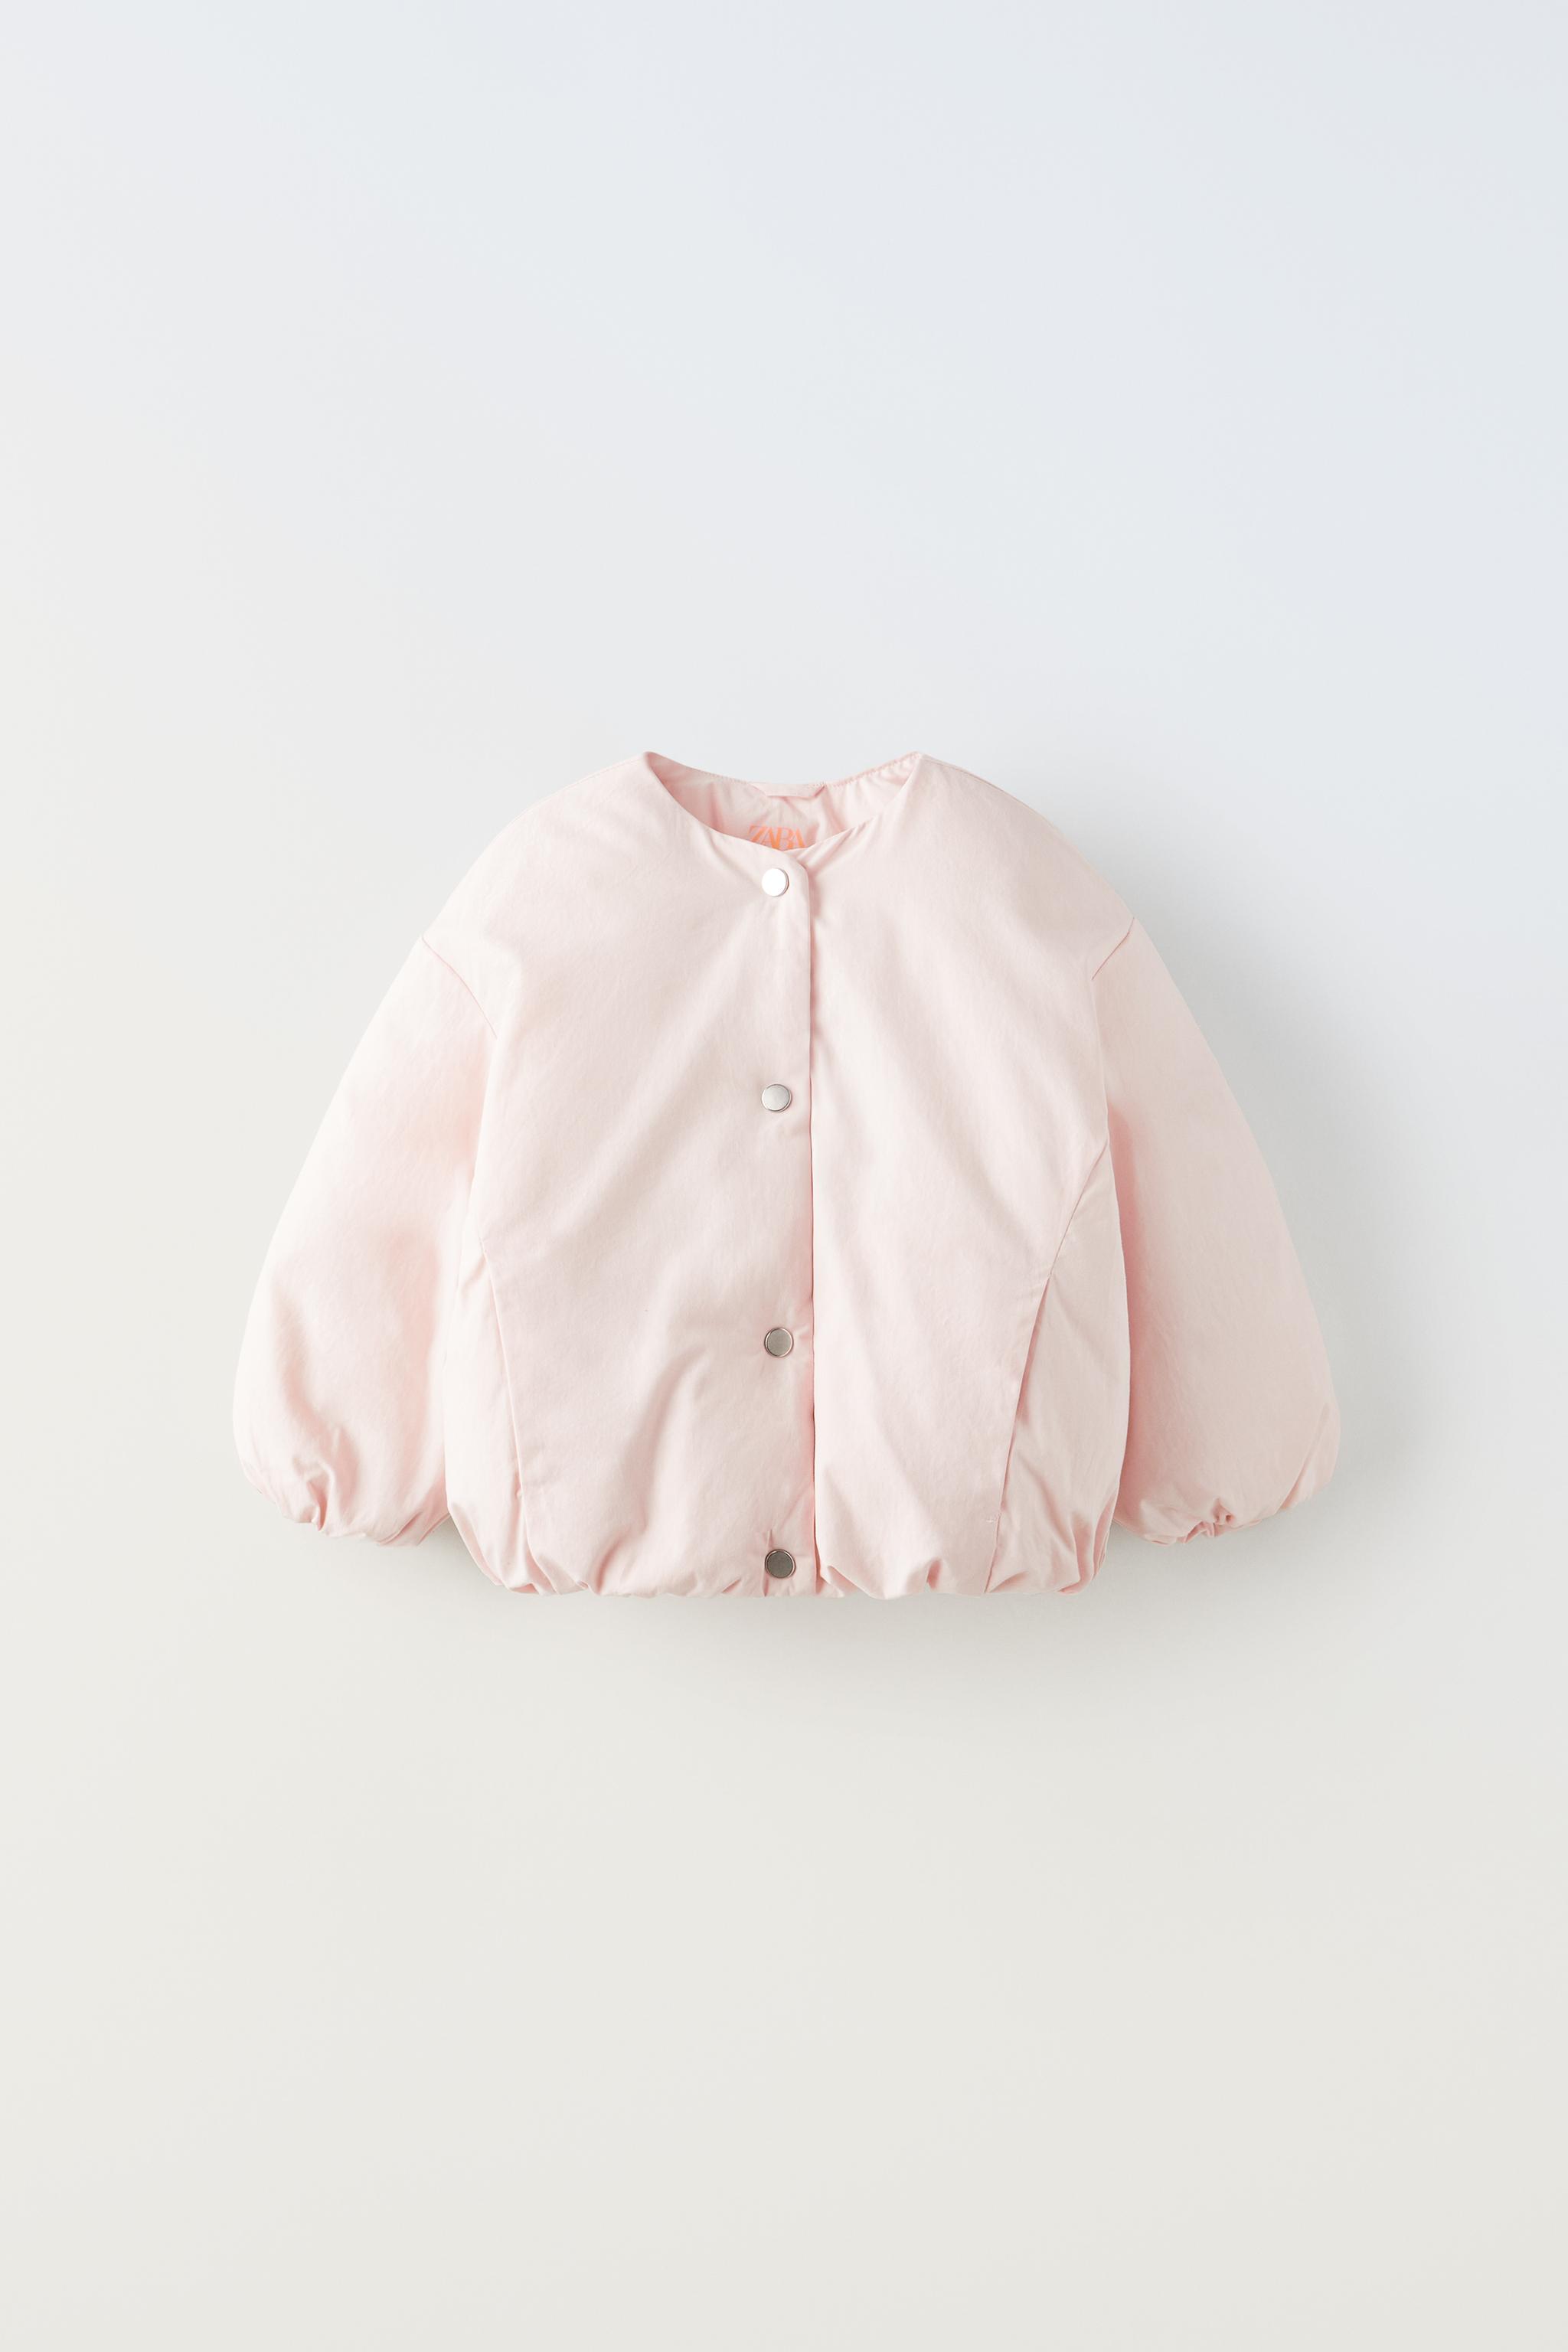 Zara Baby Girl Outerwear Collection Best Sale | bellvalefarms.com